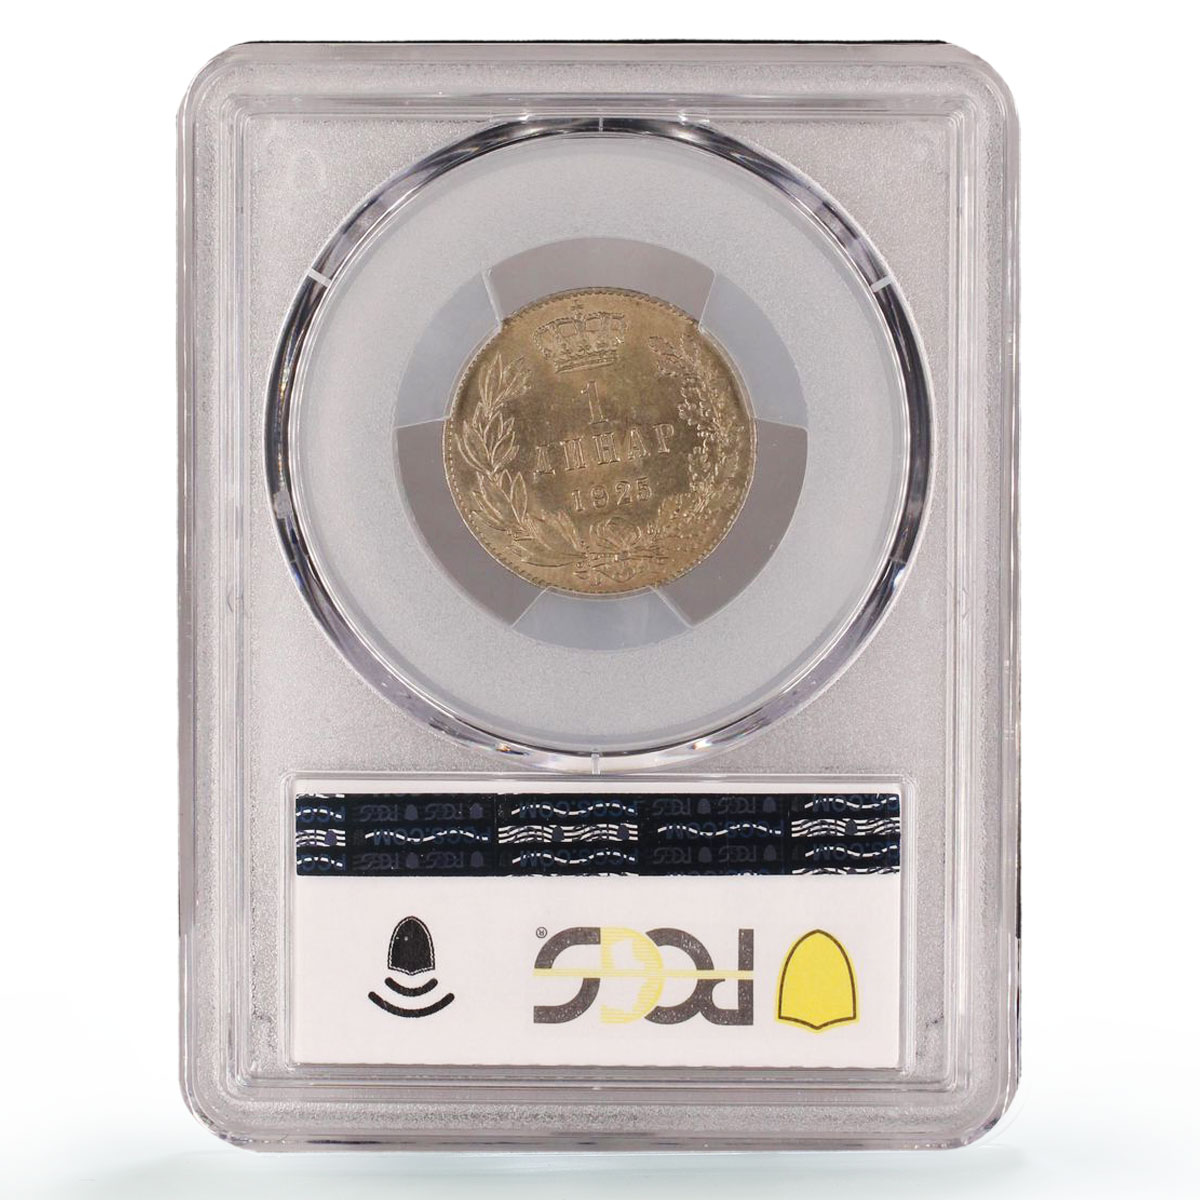 Yugoslavia 1 dinar Regular Coinage Alexander I Brussels MS64 PCGS CuNi coin 1925